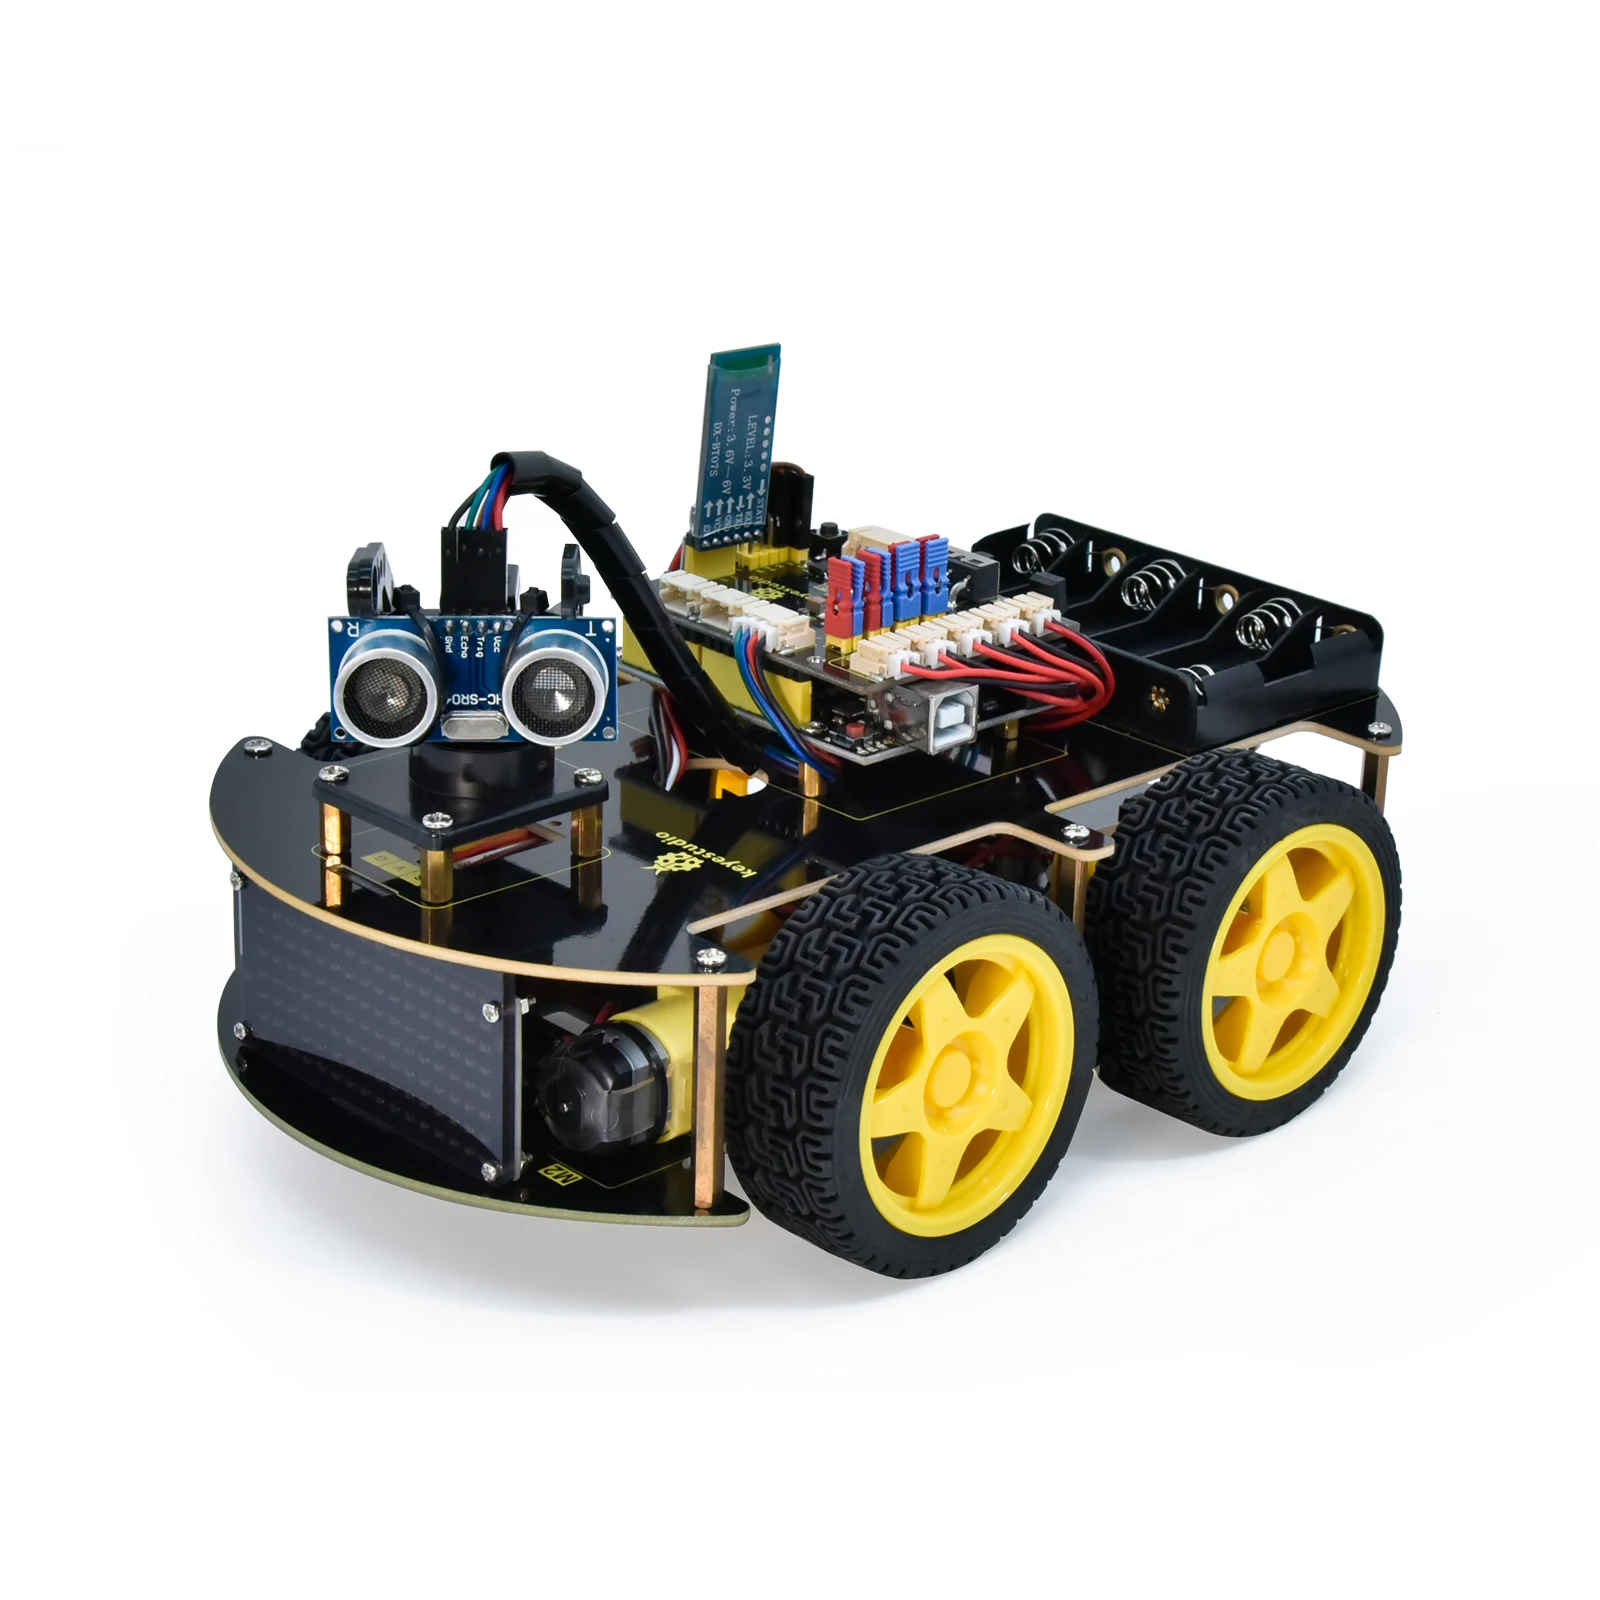 4wd Robot Car Educational Stem Toys Robotics Kit Robot Kit For Arduino - Buy Robot Arduino,Car For Arduino,Robotic Kits on Alibaba.com